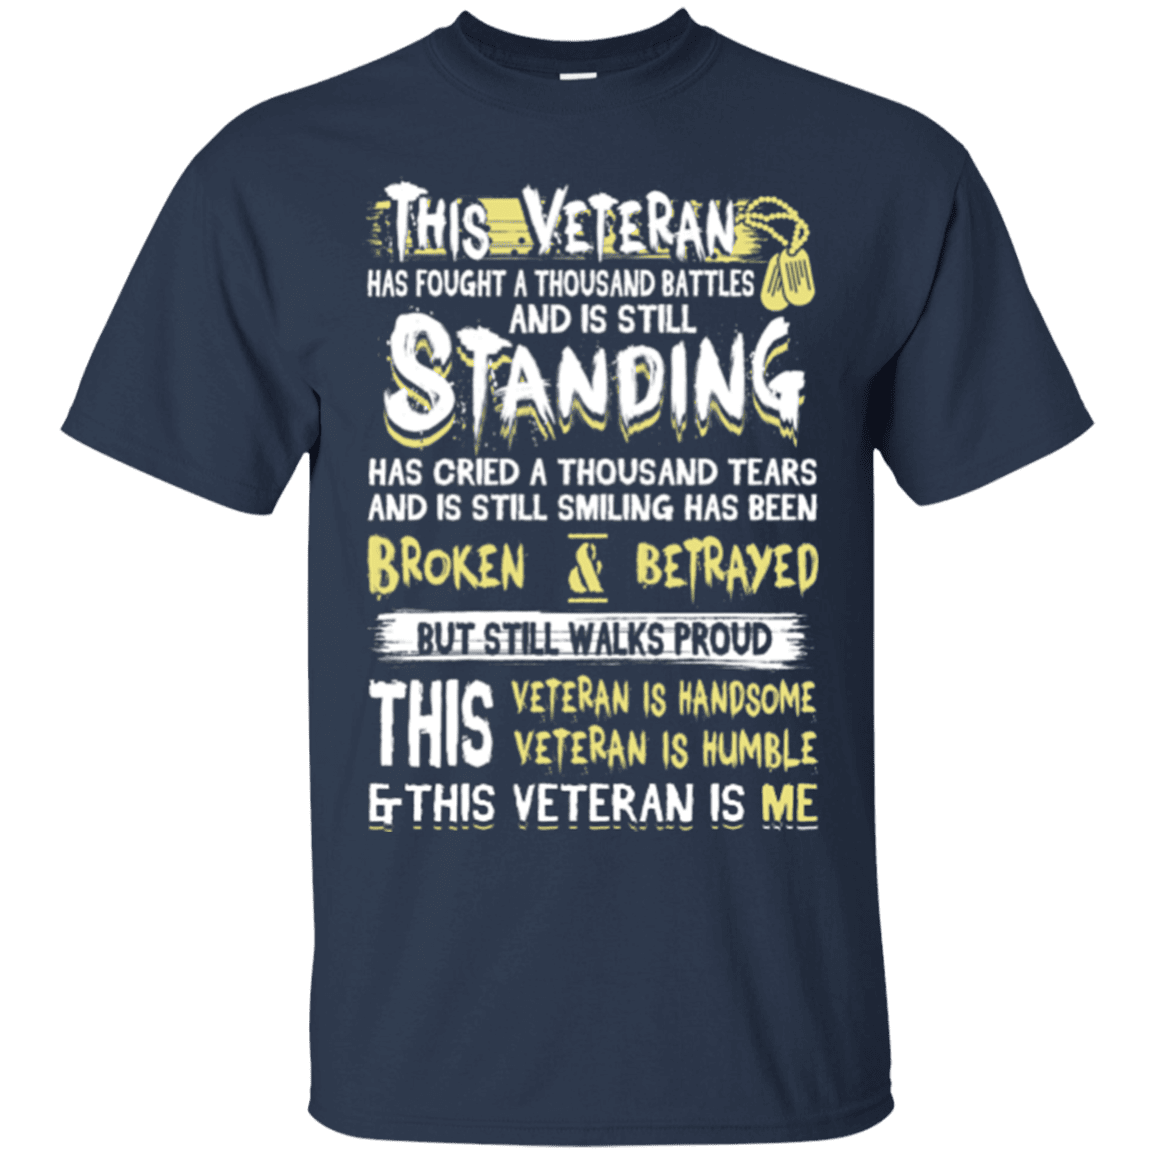 Military T-Shirt "This Veteran Standing Cried and Smiling Broken & Betrayed"-TShirt-General-Veterans Nation